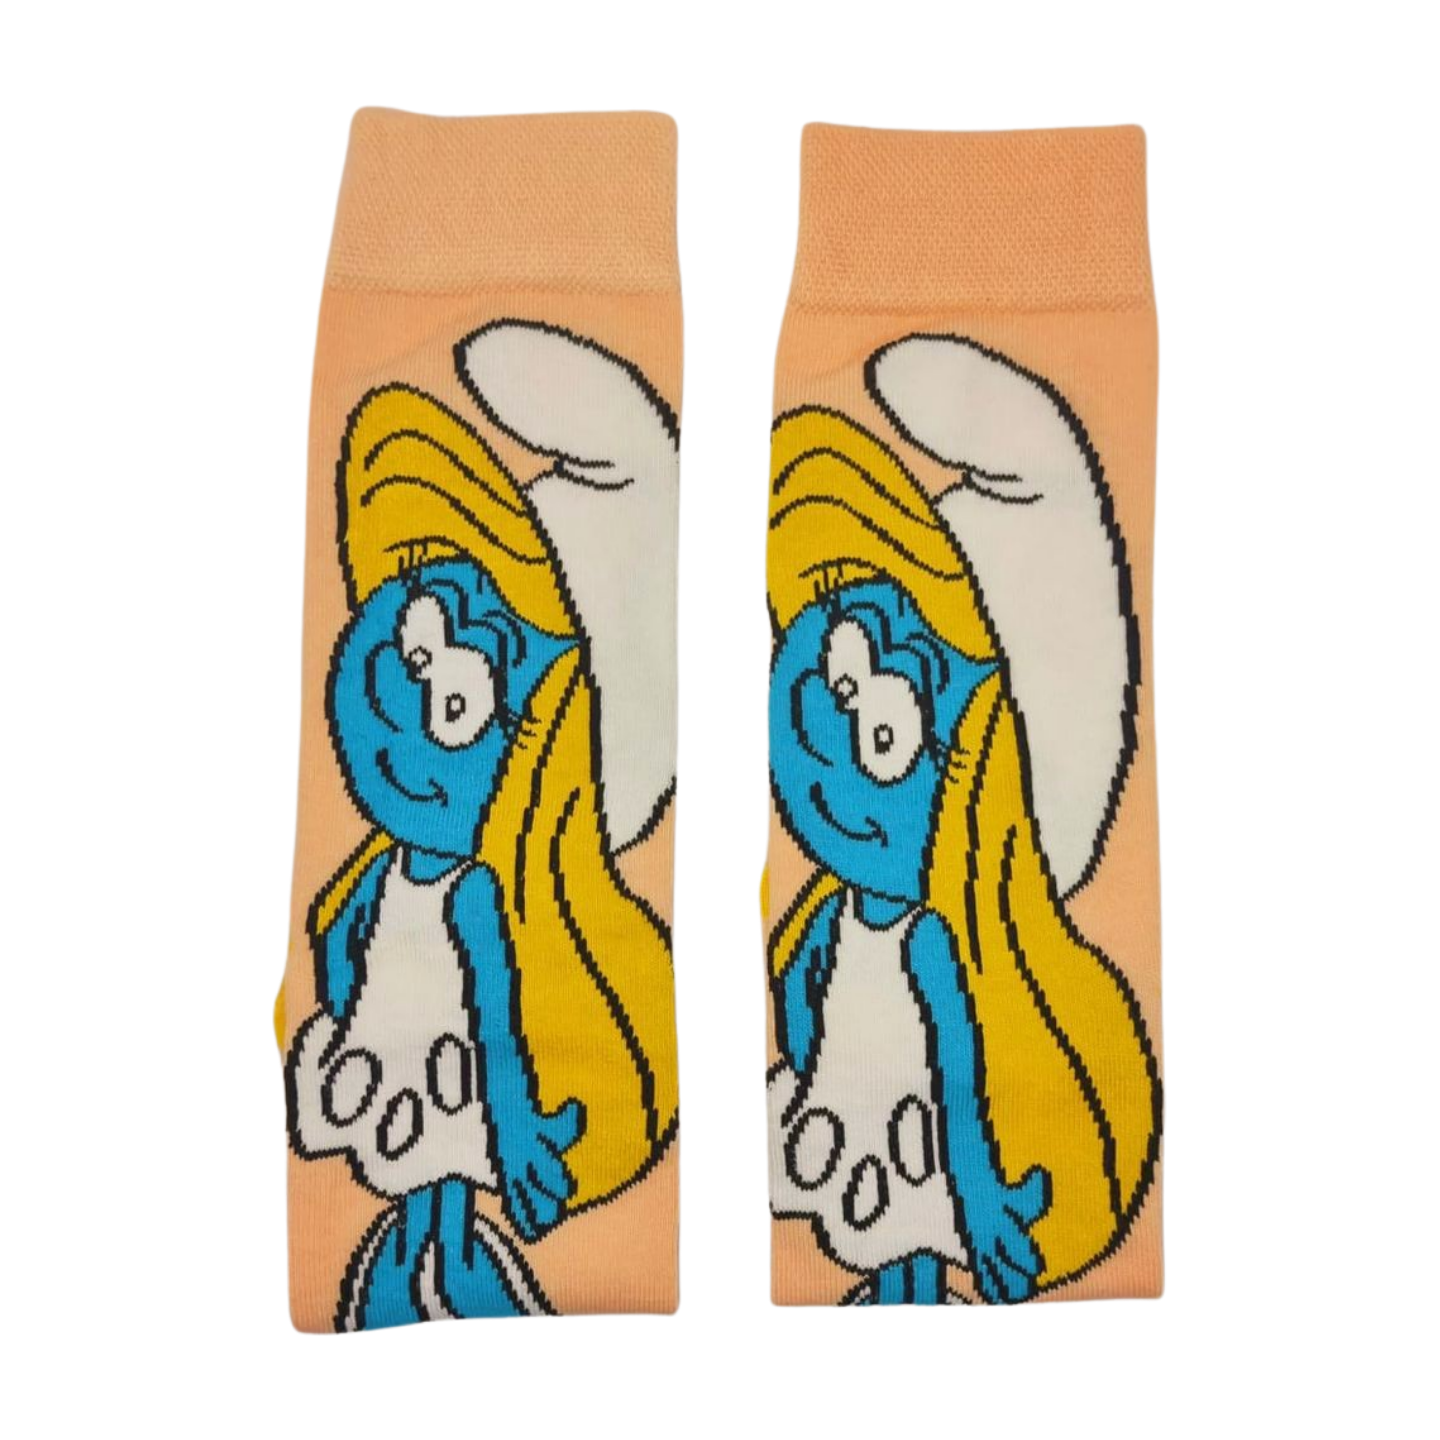 Smurfette Cartoon Character Socks for Smurf-tastic Style